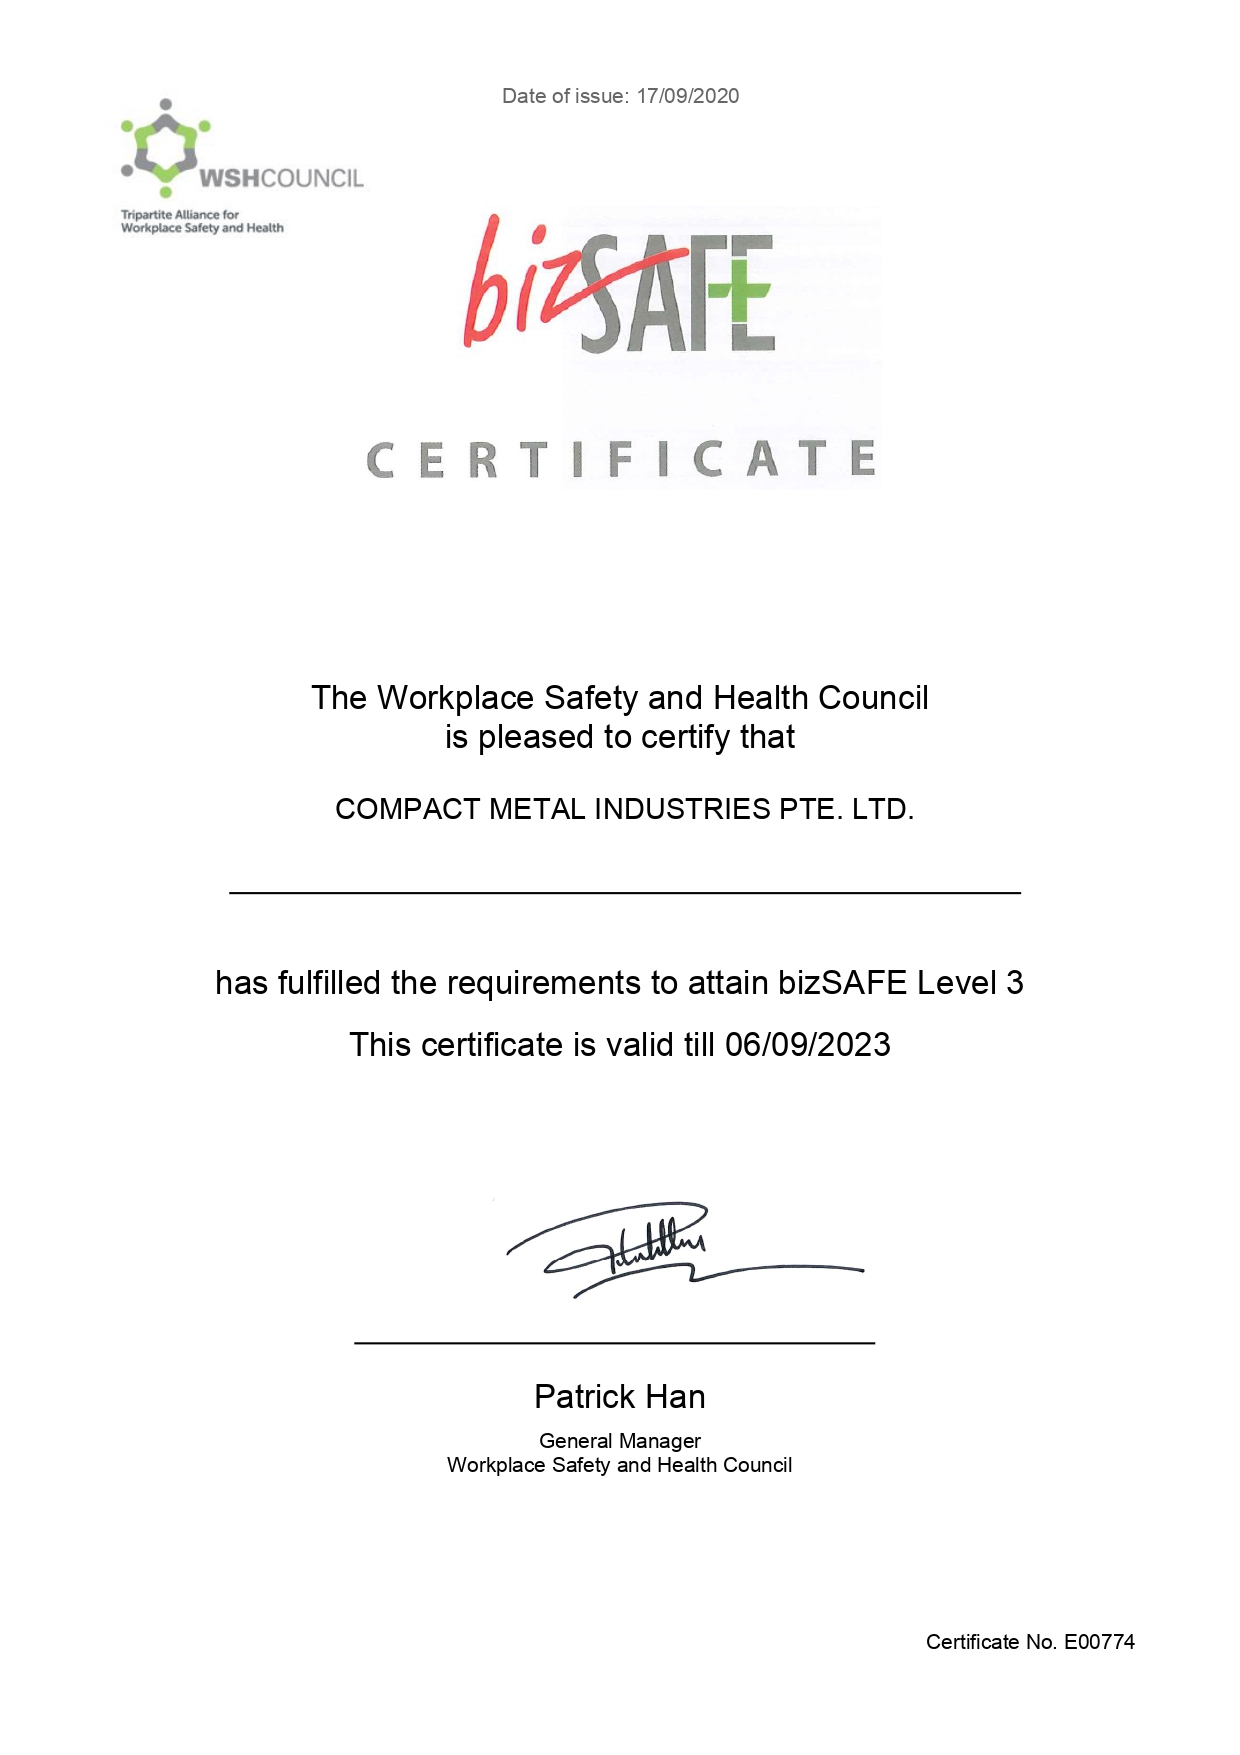 BizSAFE certificate valid till 6.9.2023_page-0001